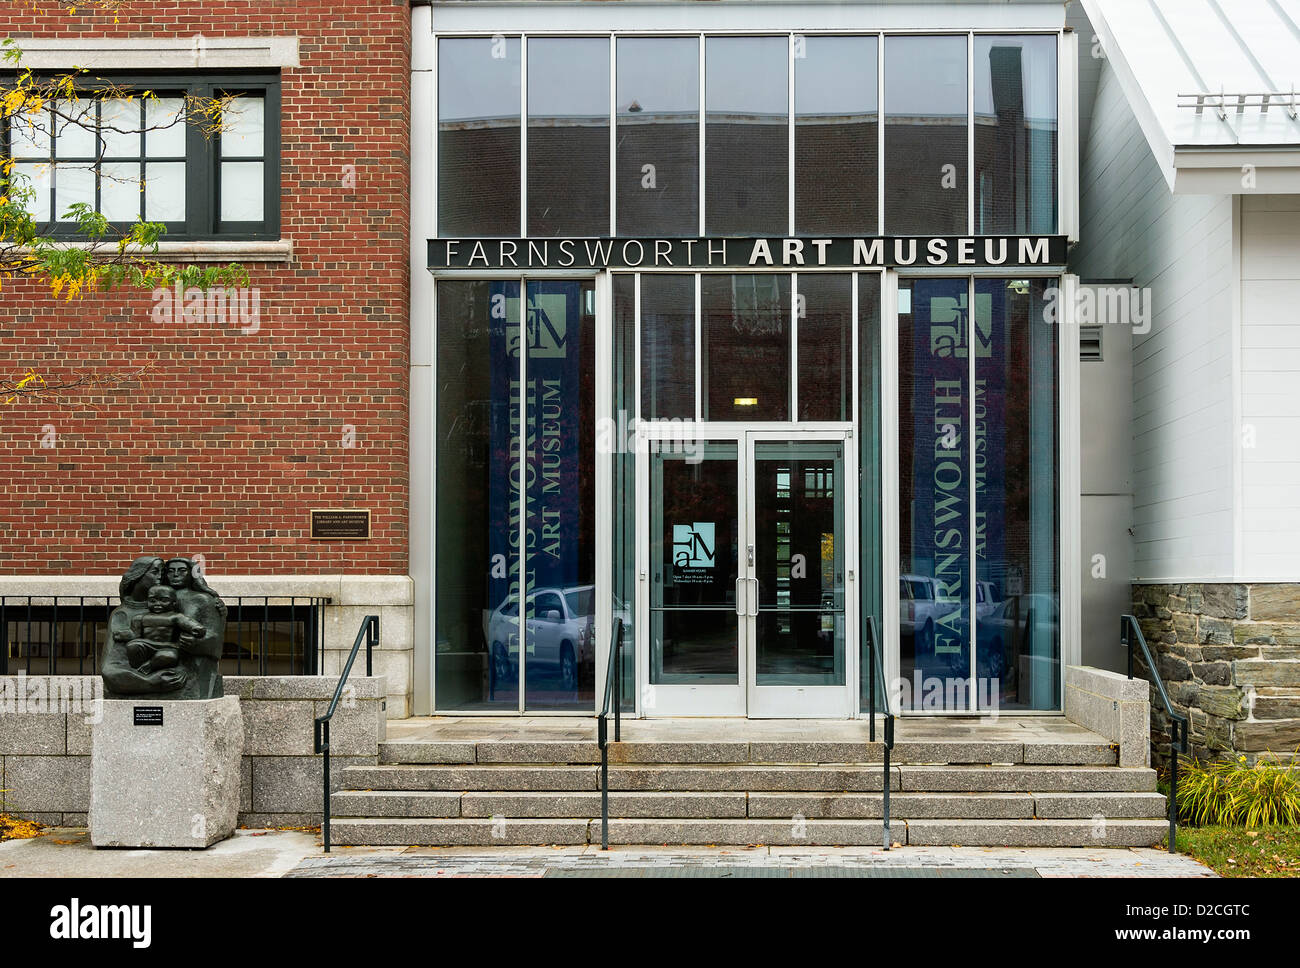 Farnsworth art museum, Rockland, Maine, USA Banque D'Images